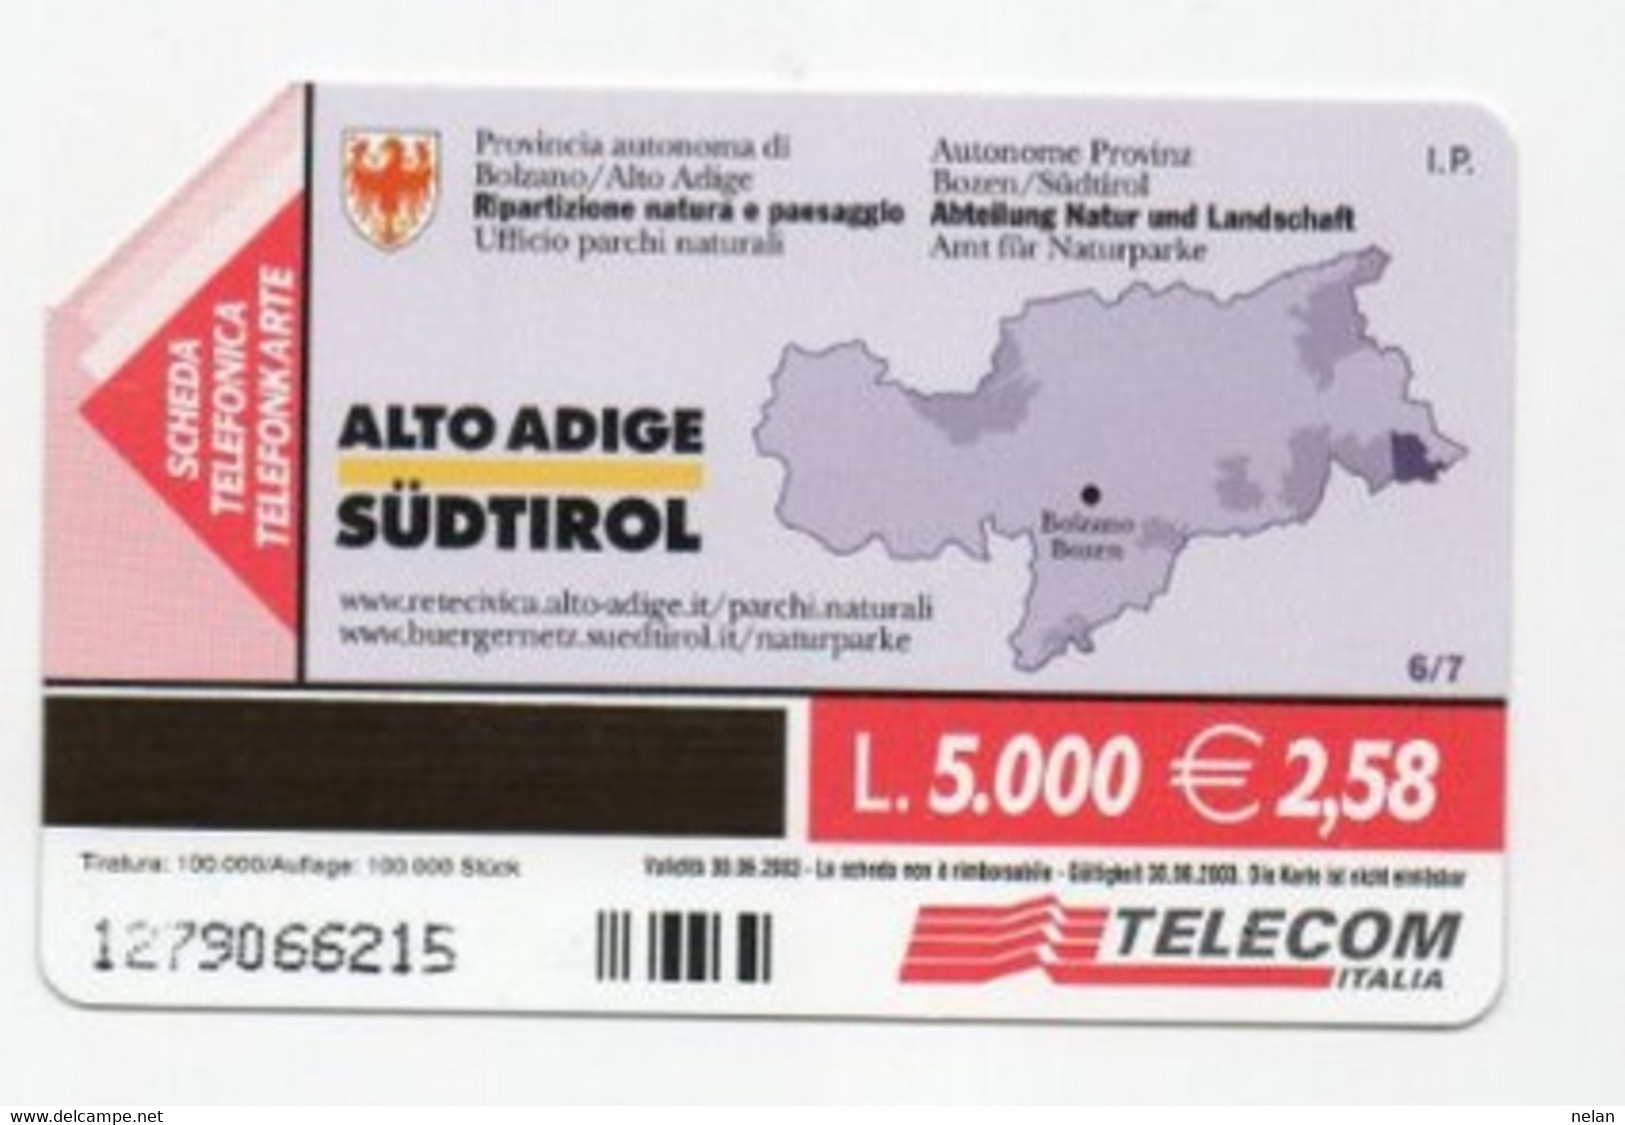 SCHEDA TELEFONICA - PHONE CARD - ITALIA - TELECOM - ALTO ADIGE - Montañas